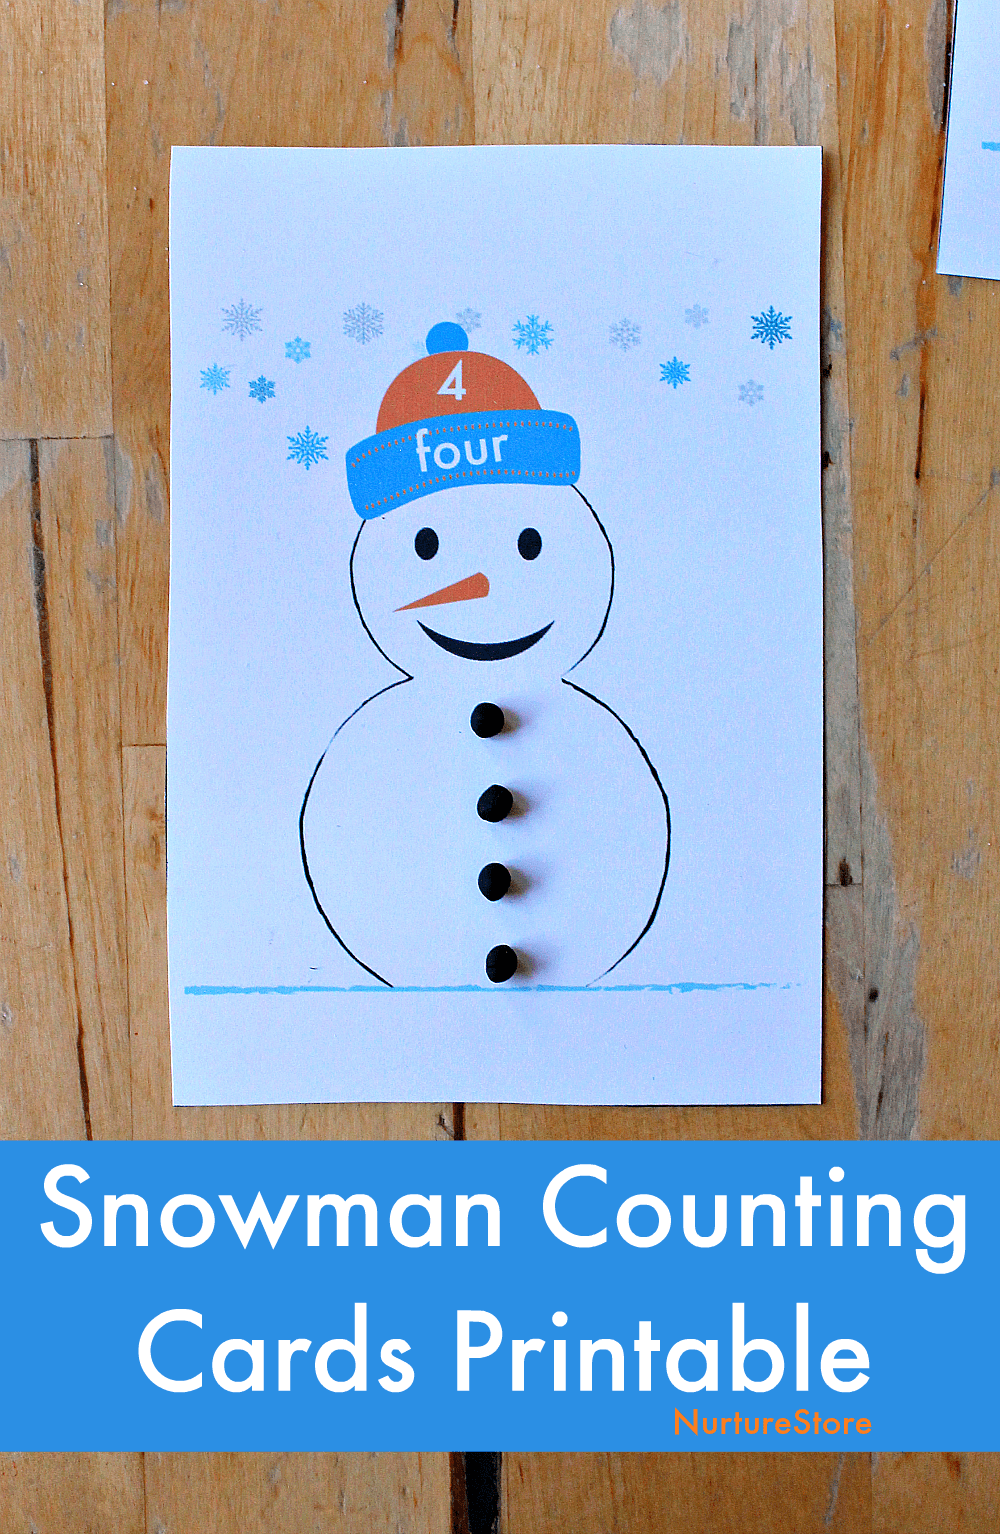 Snowmen counting cards printable - NurtureStore